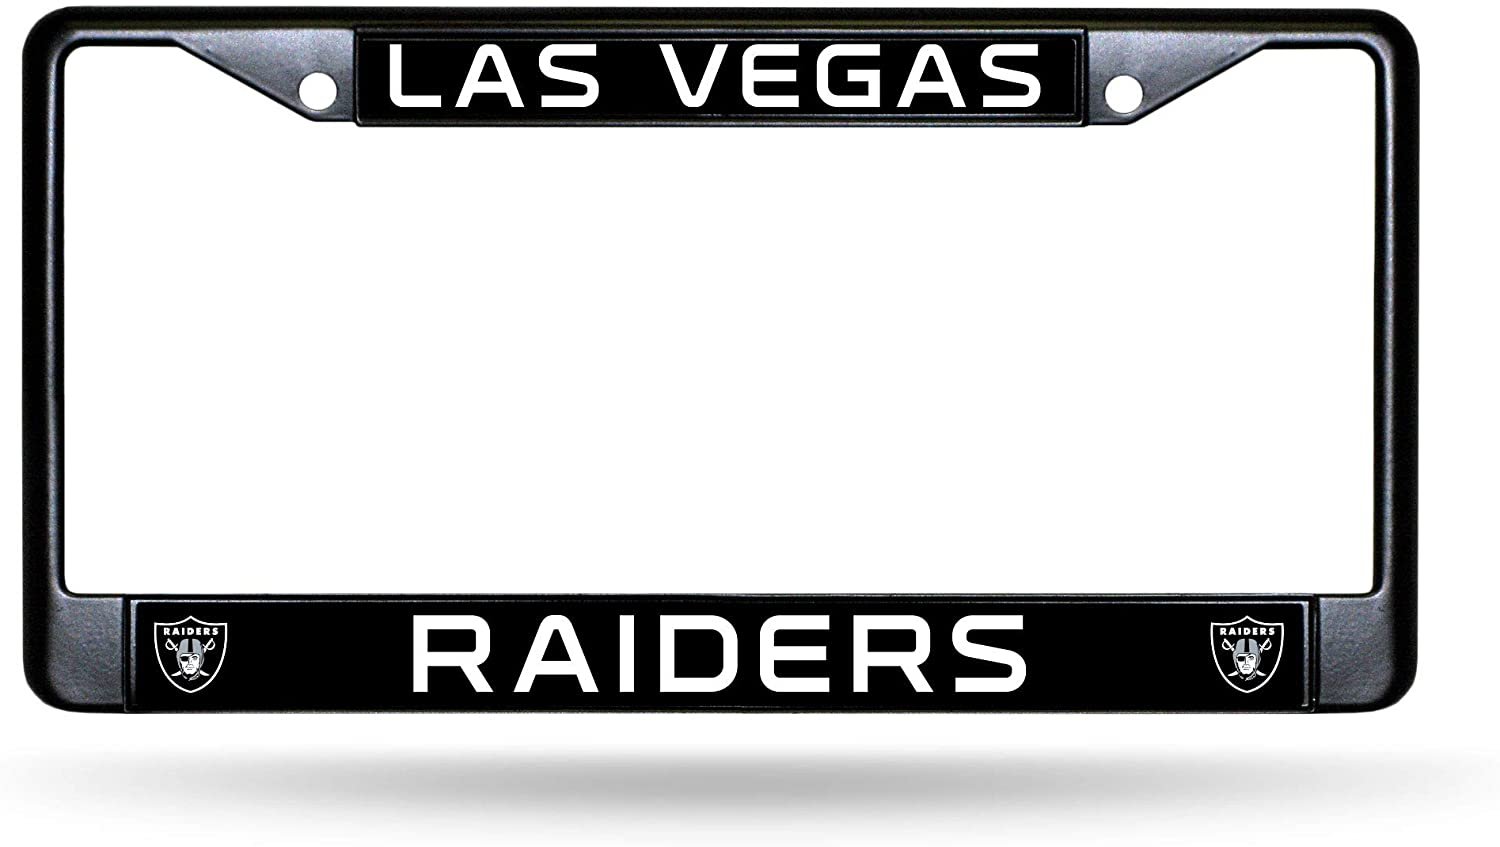 Las Vegas Raiders Premium Black Metal License License Plate Frame Tag Cover, 12x6 Inch